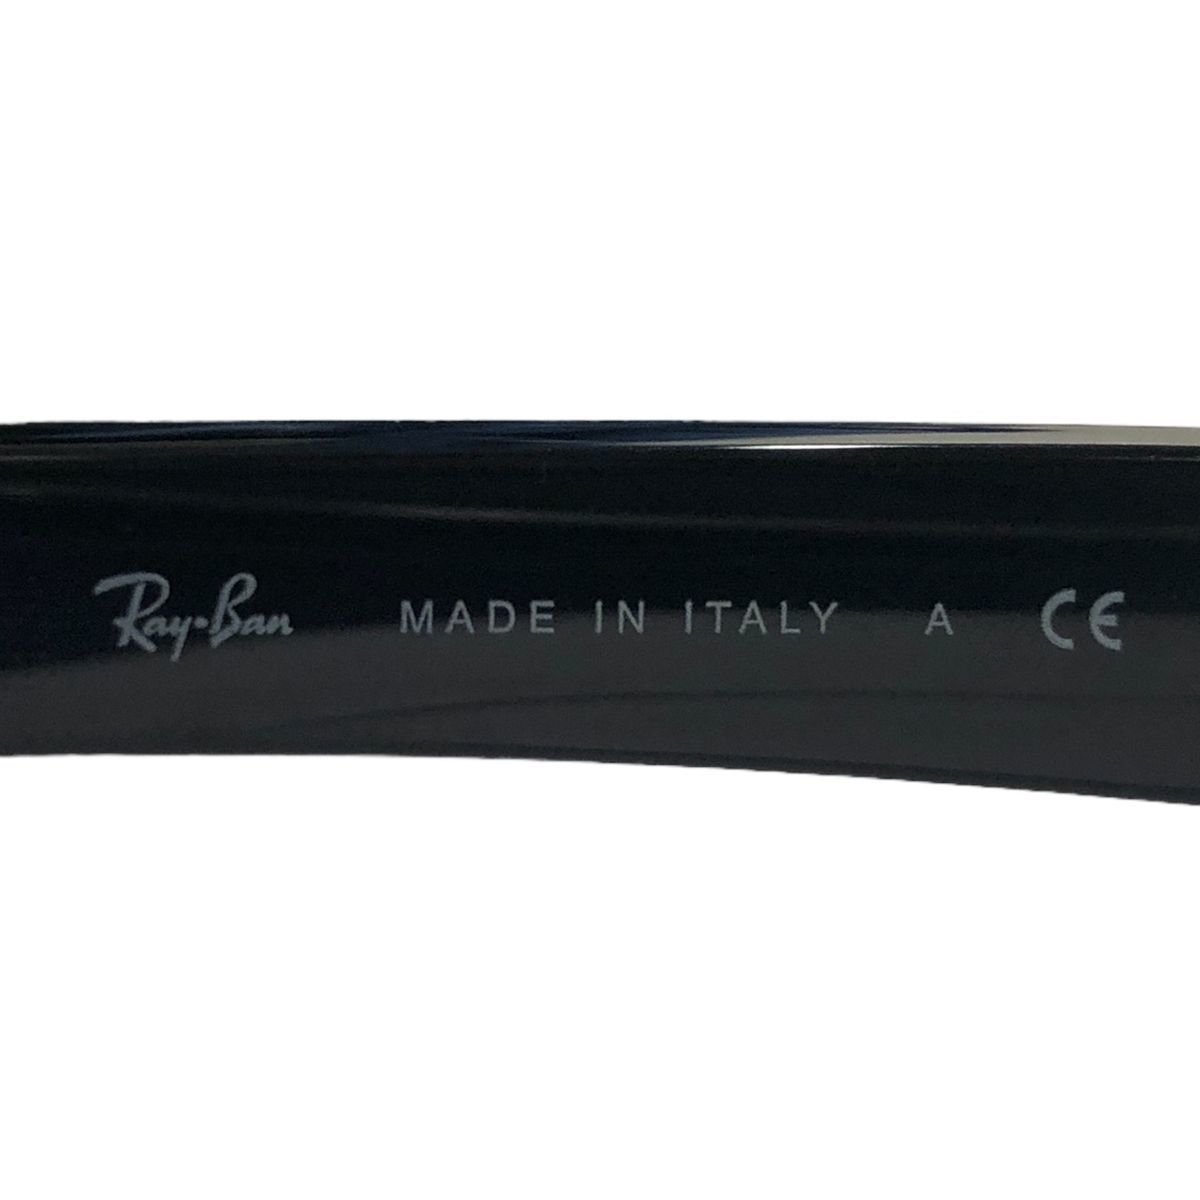 [ б/у ]Ray Ban RayBan солнцезащитные очки The Boy Friend RB4147 черный градация пластиковая оправа коробка нет 22047431MK